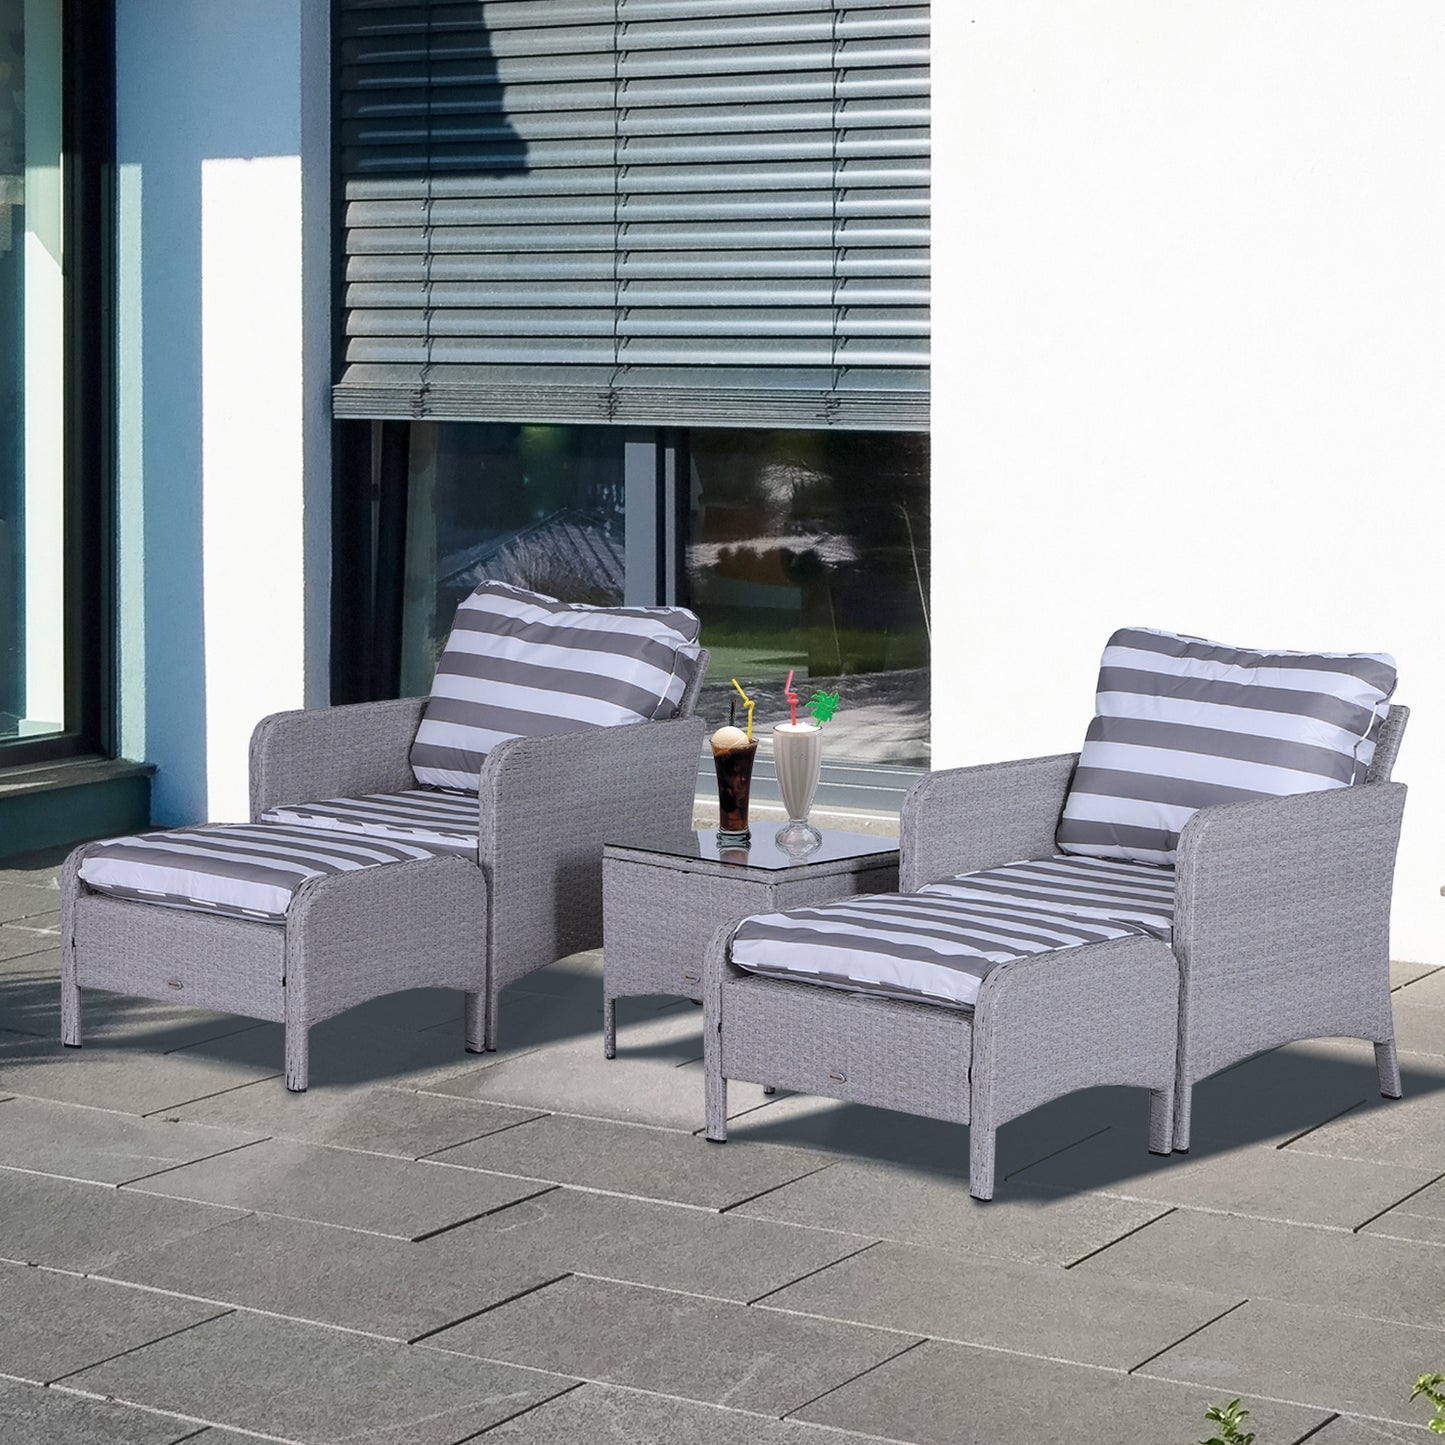 Outsunny 5-Piece PE Rattan Outdoor Garden Furniture Set Light Grey